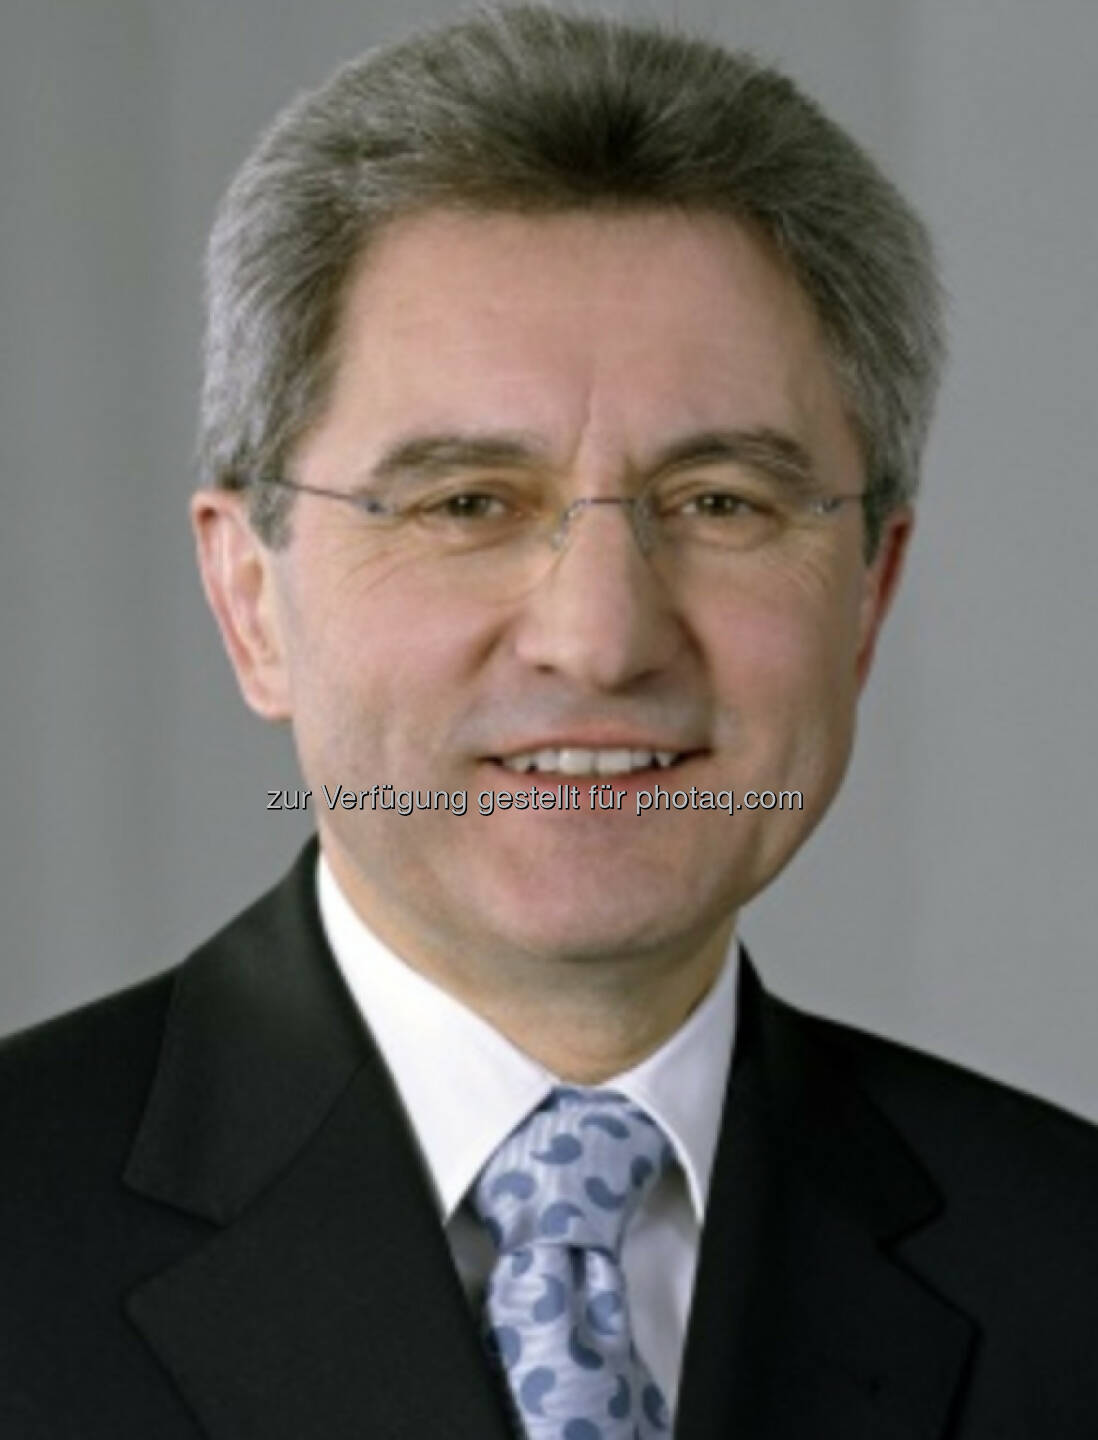 Johann Windisch, Ex-Vorstand Wienerberger (16. Oktober), finanzmarktfoto.at wünscht alles Gute!